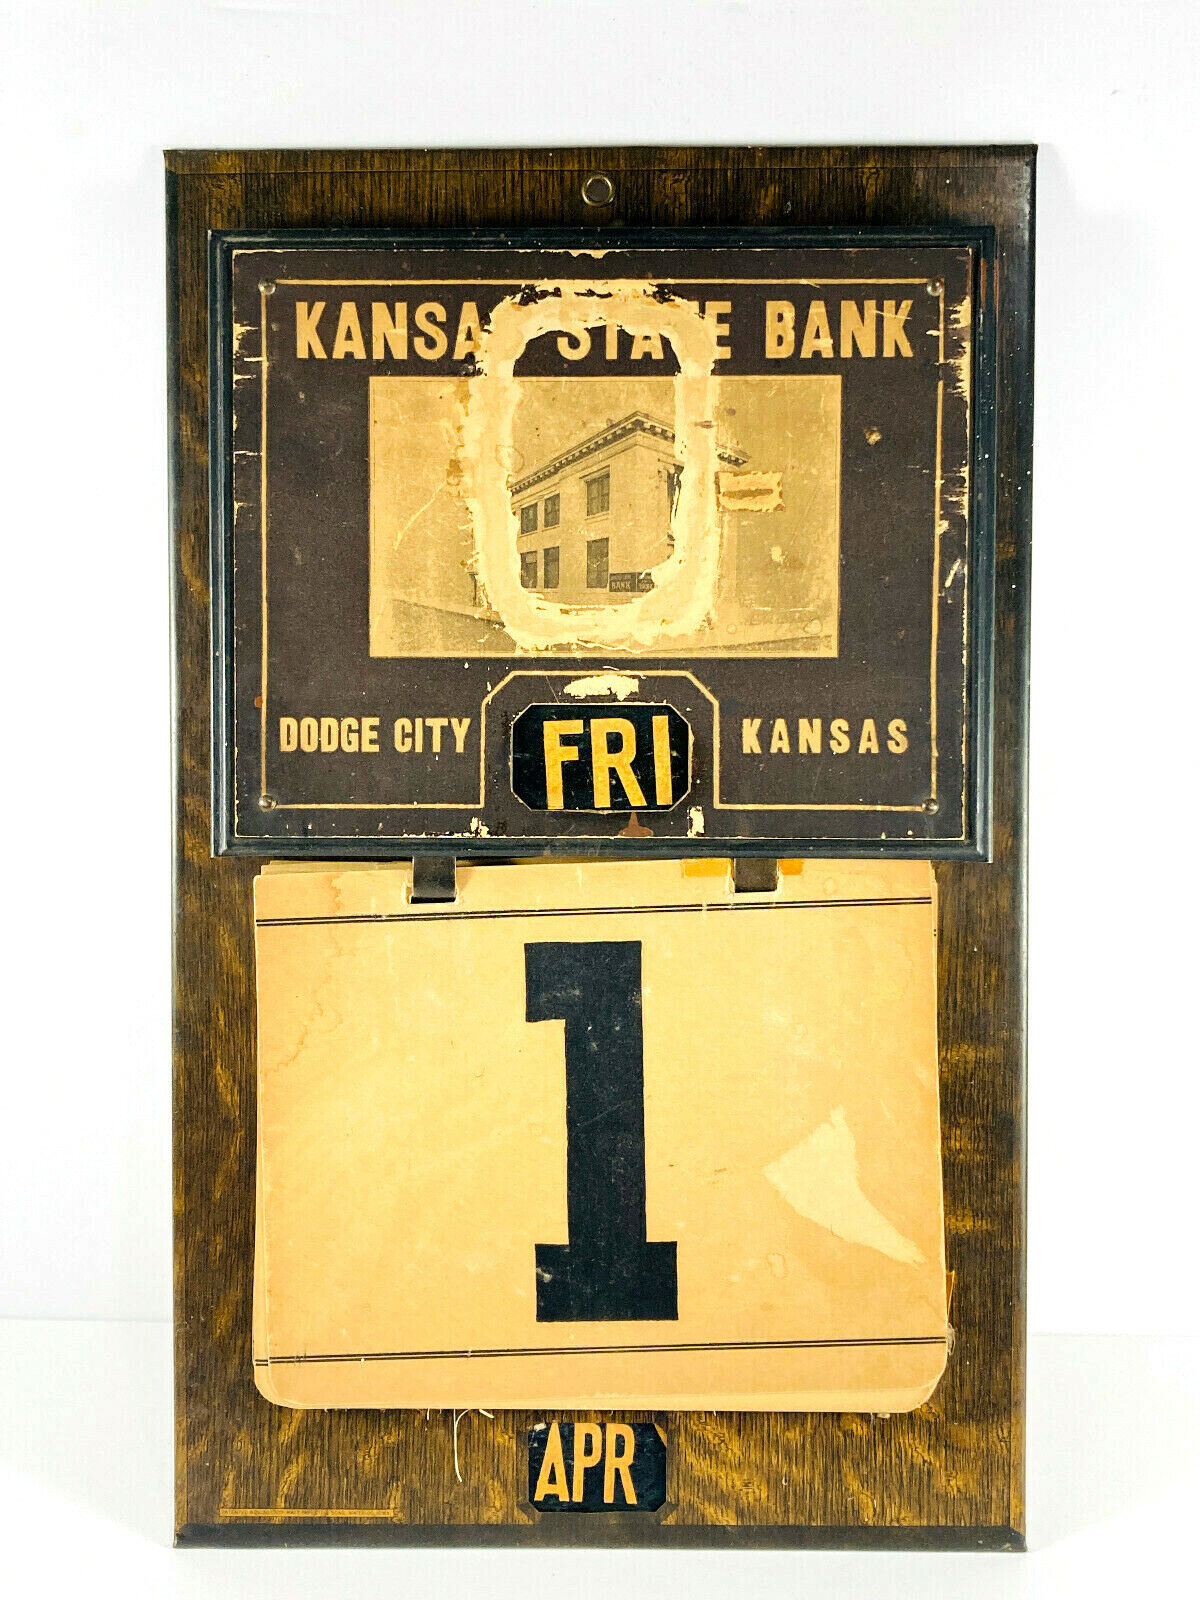 RARE 1914 Dodge City Kansas KS State Bank Advertising Daily Date Calendar